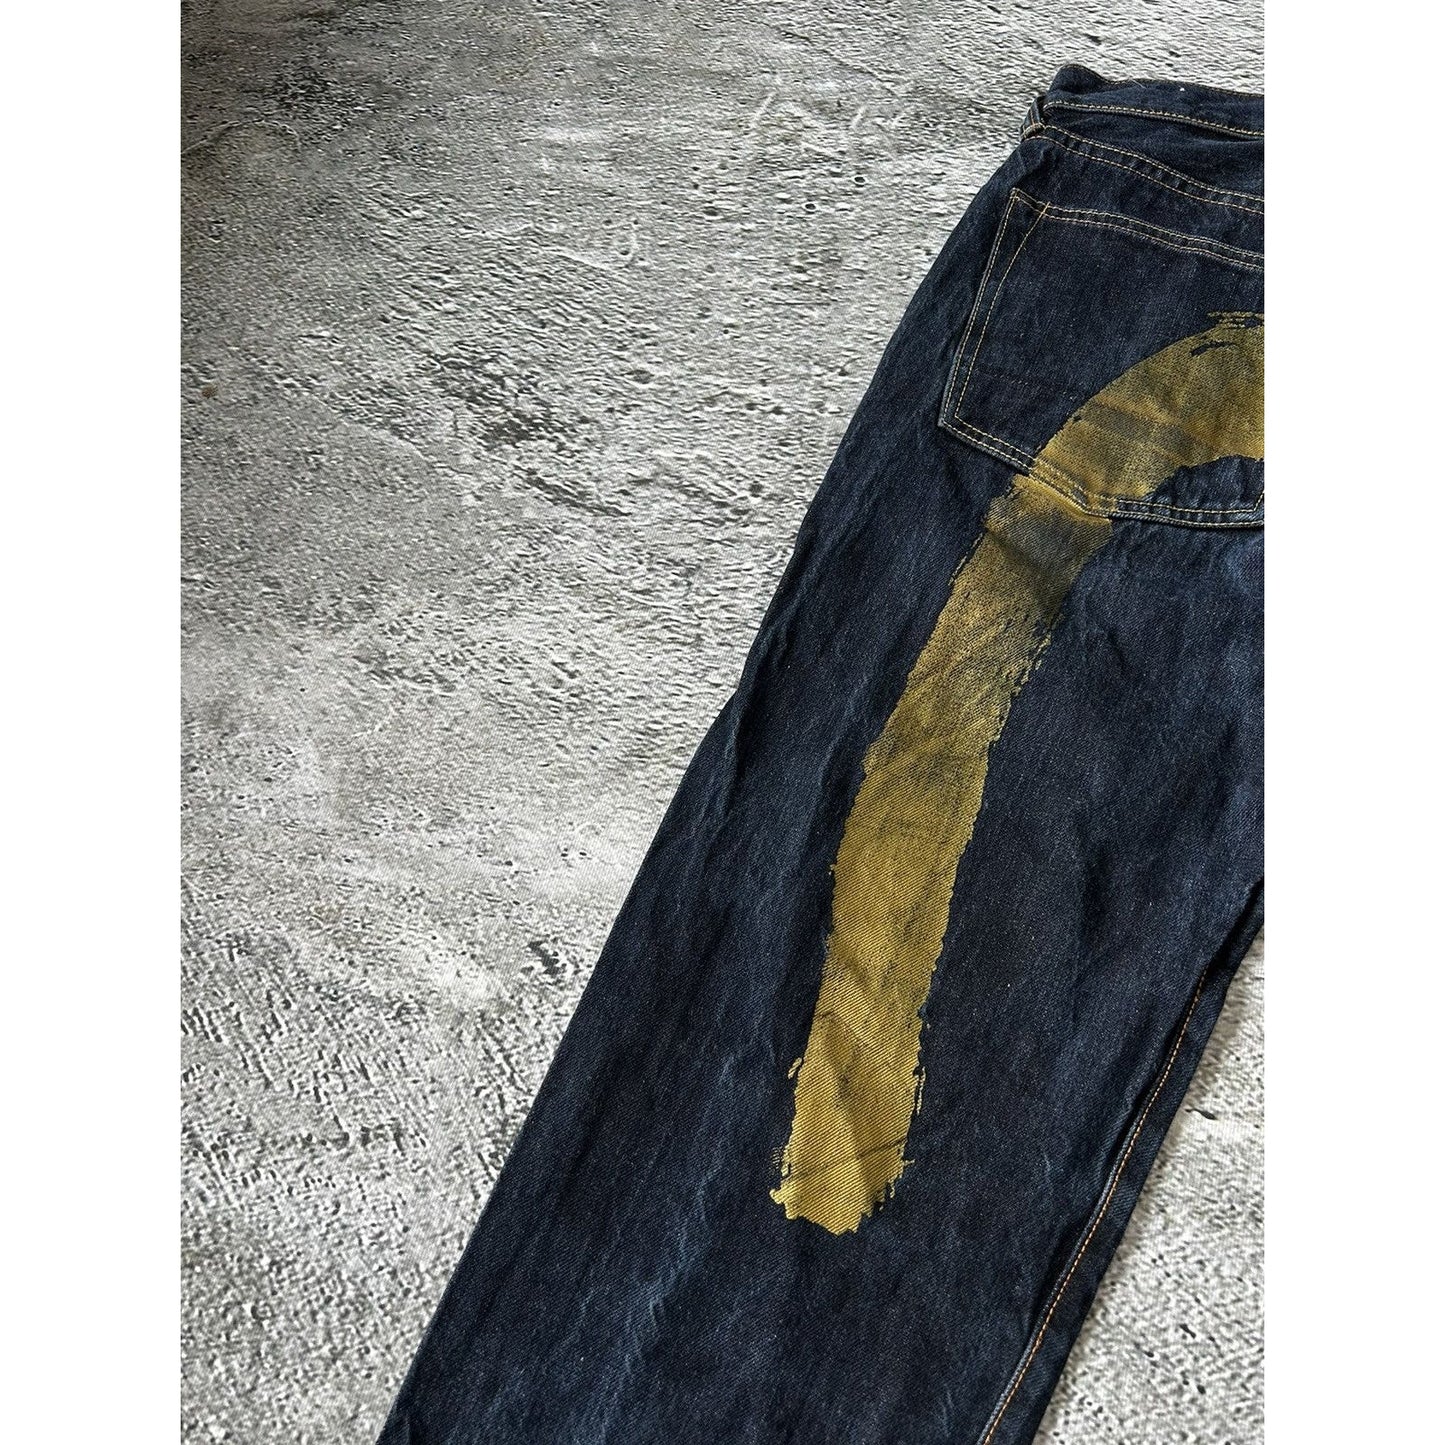 Evisu jeans daicock big logo gold selvedge denim Japan